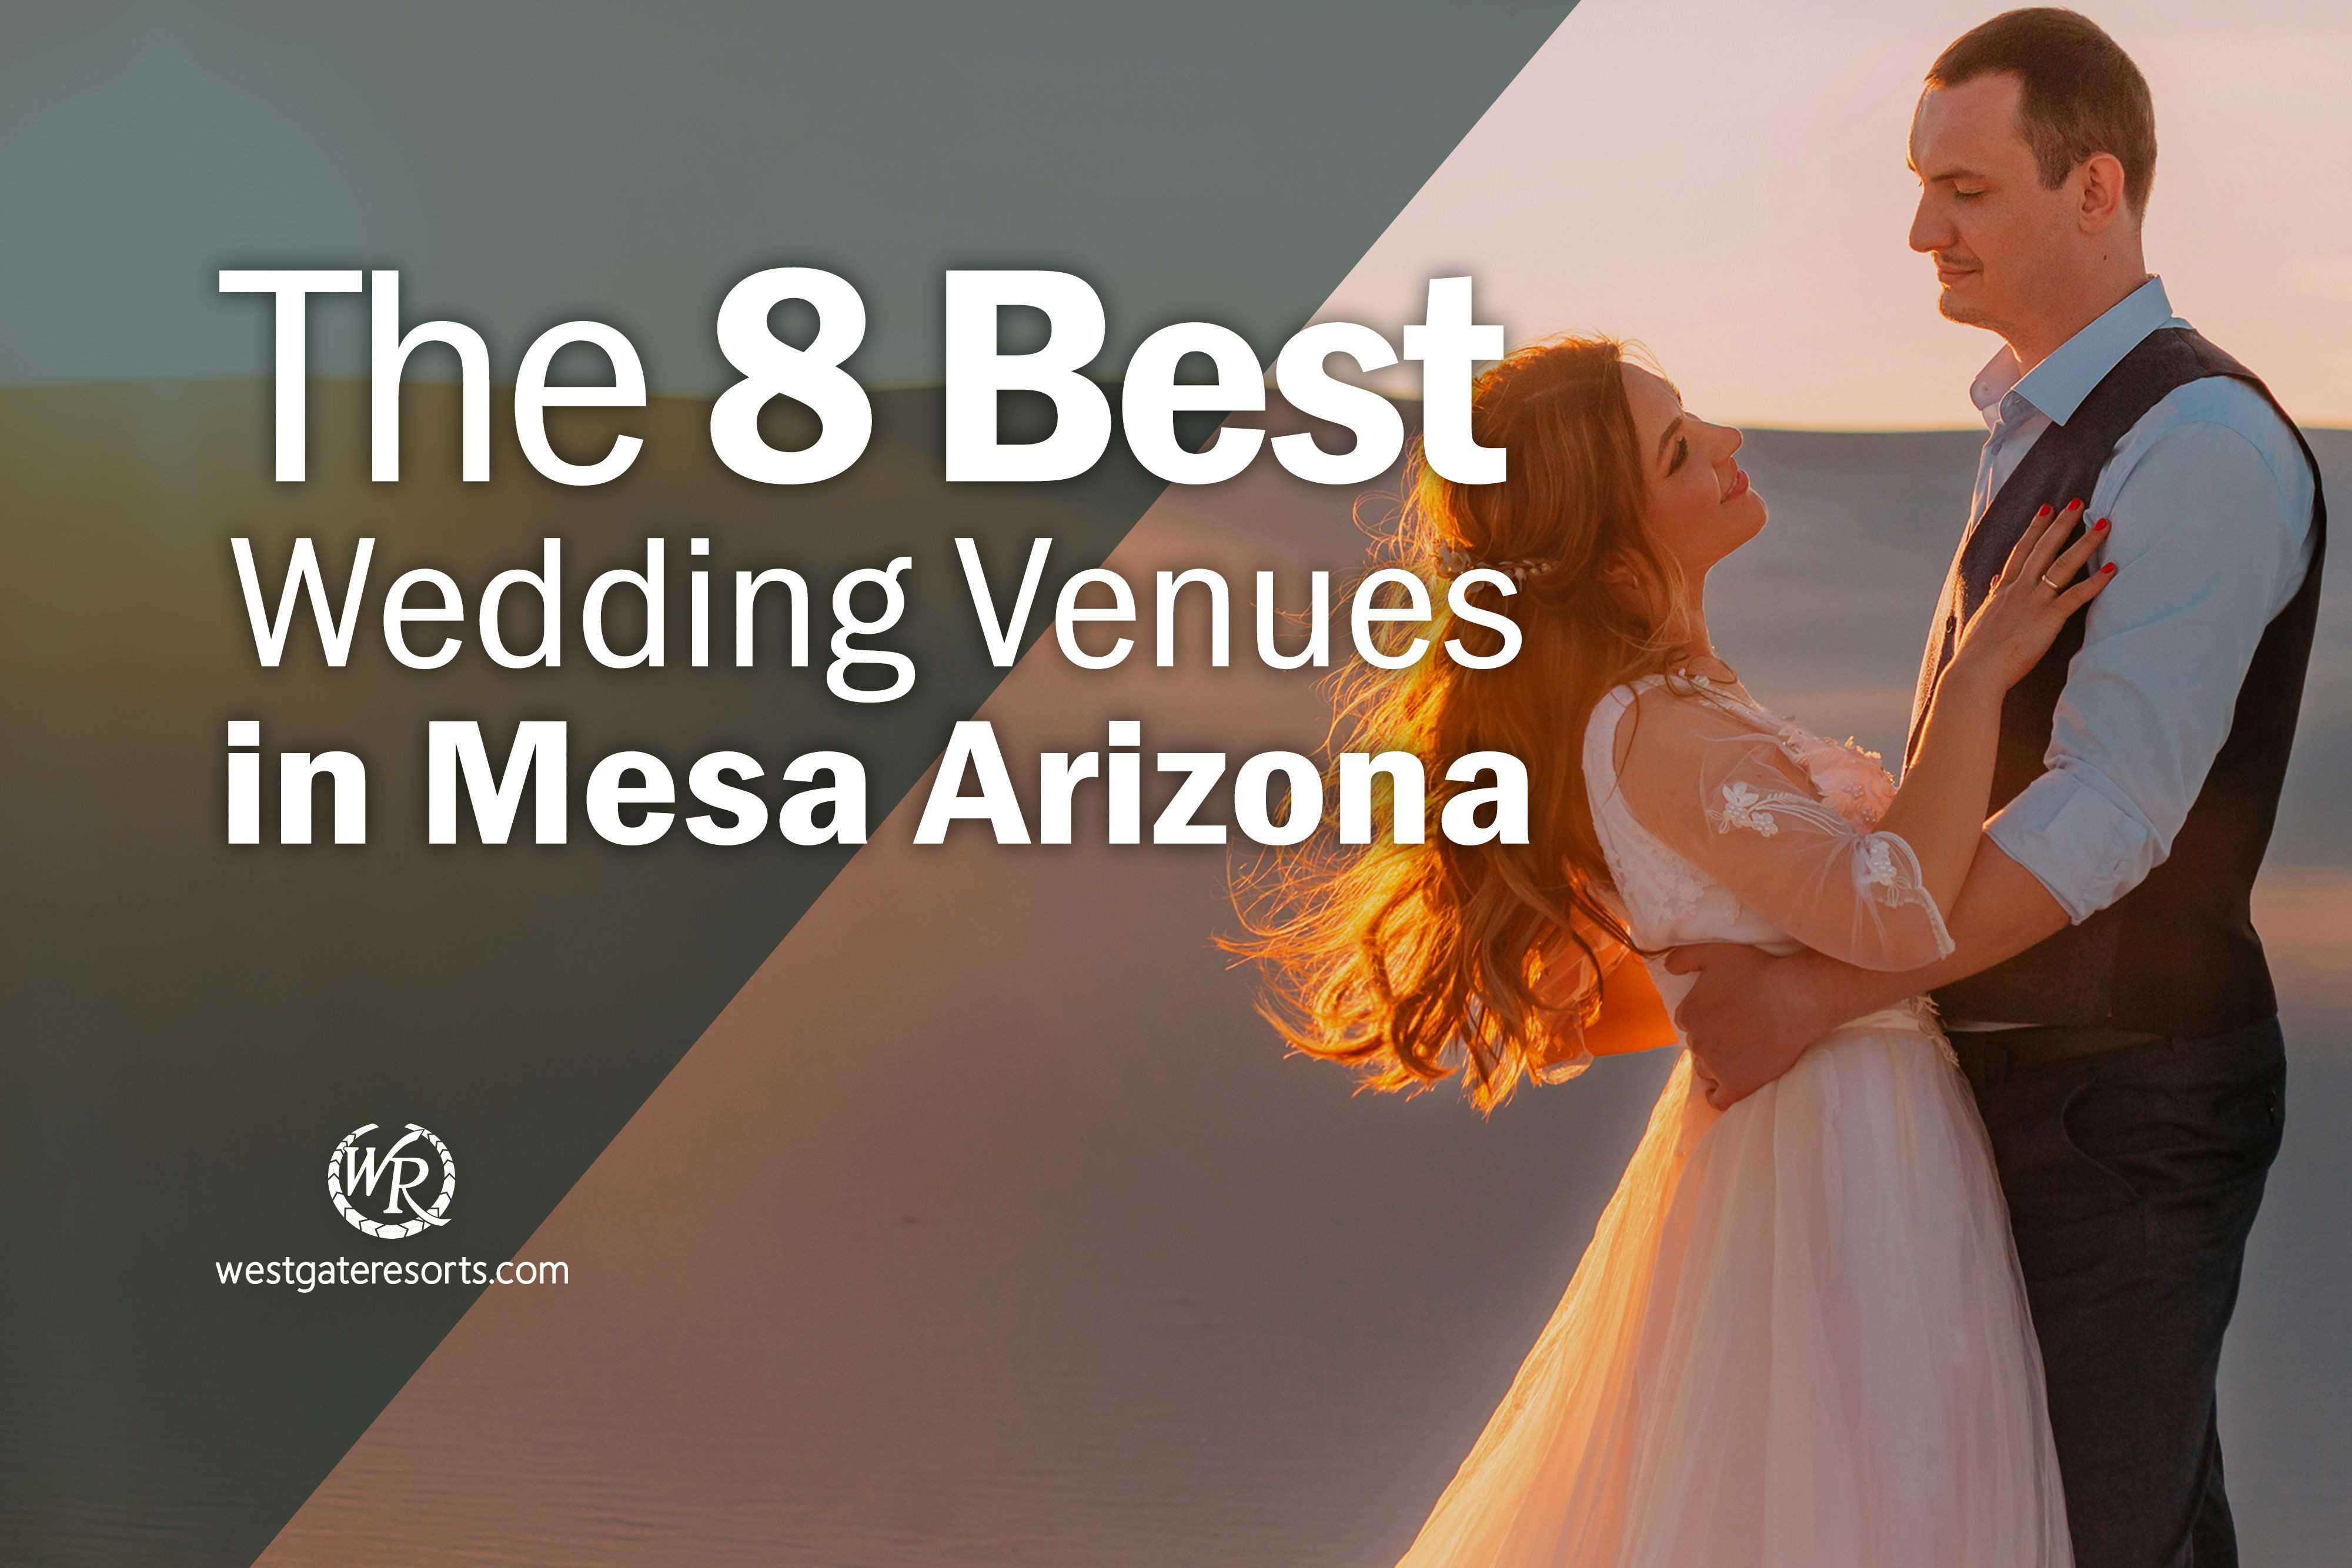 The 8 Top Wedding Venues in Mesa, Arizona